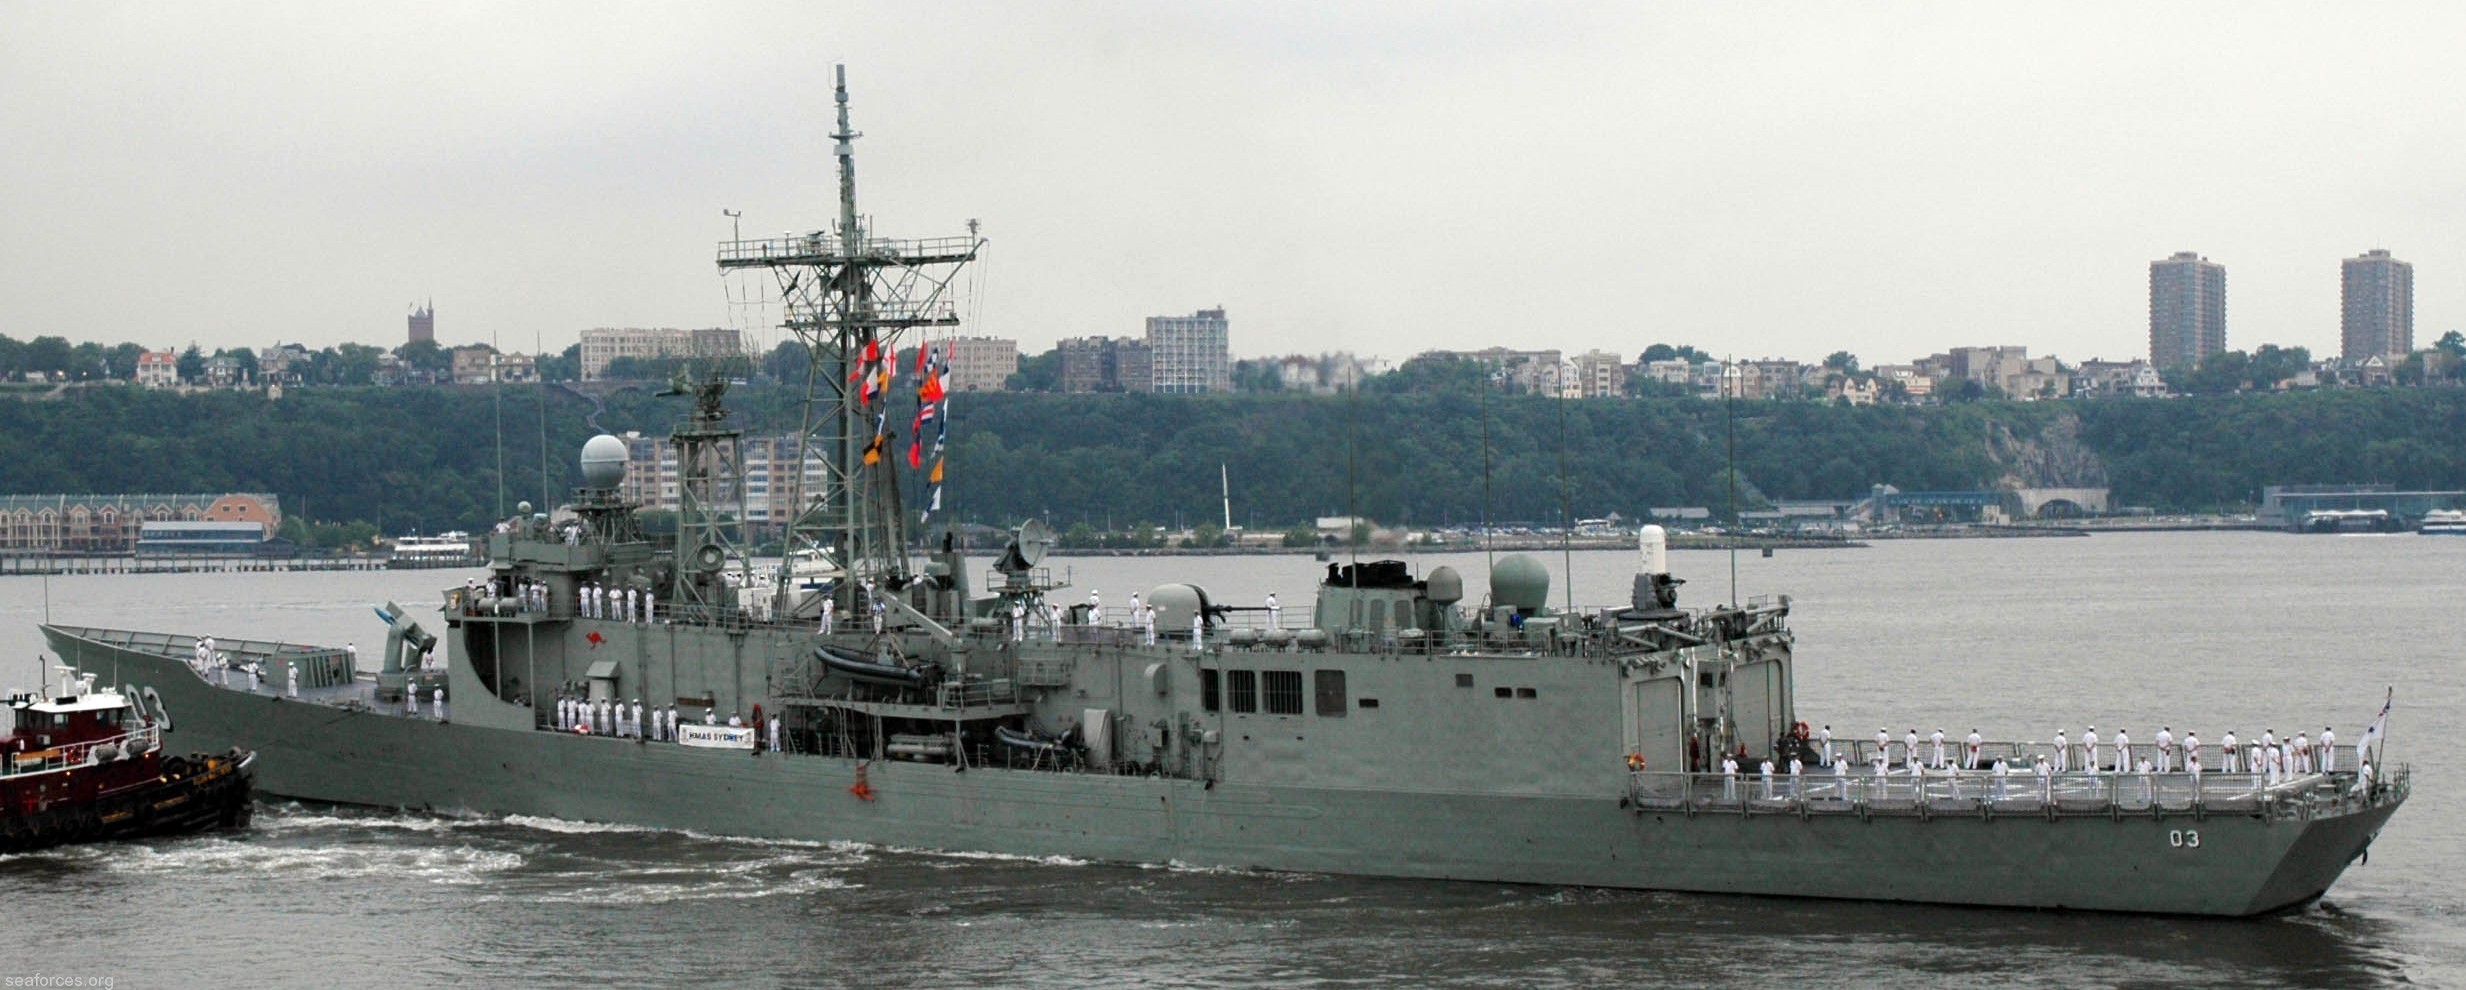 ffg-03 hmas sydney adelaide class frigate royal australian navy 2009 11 new york